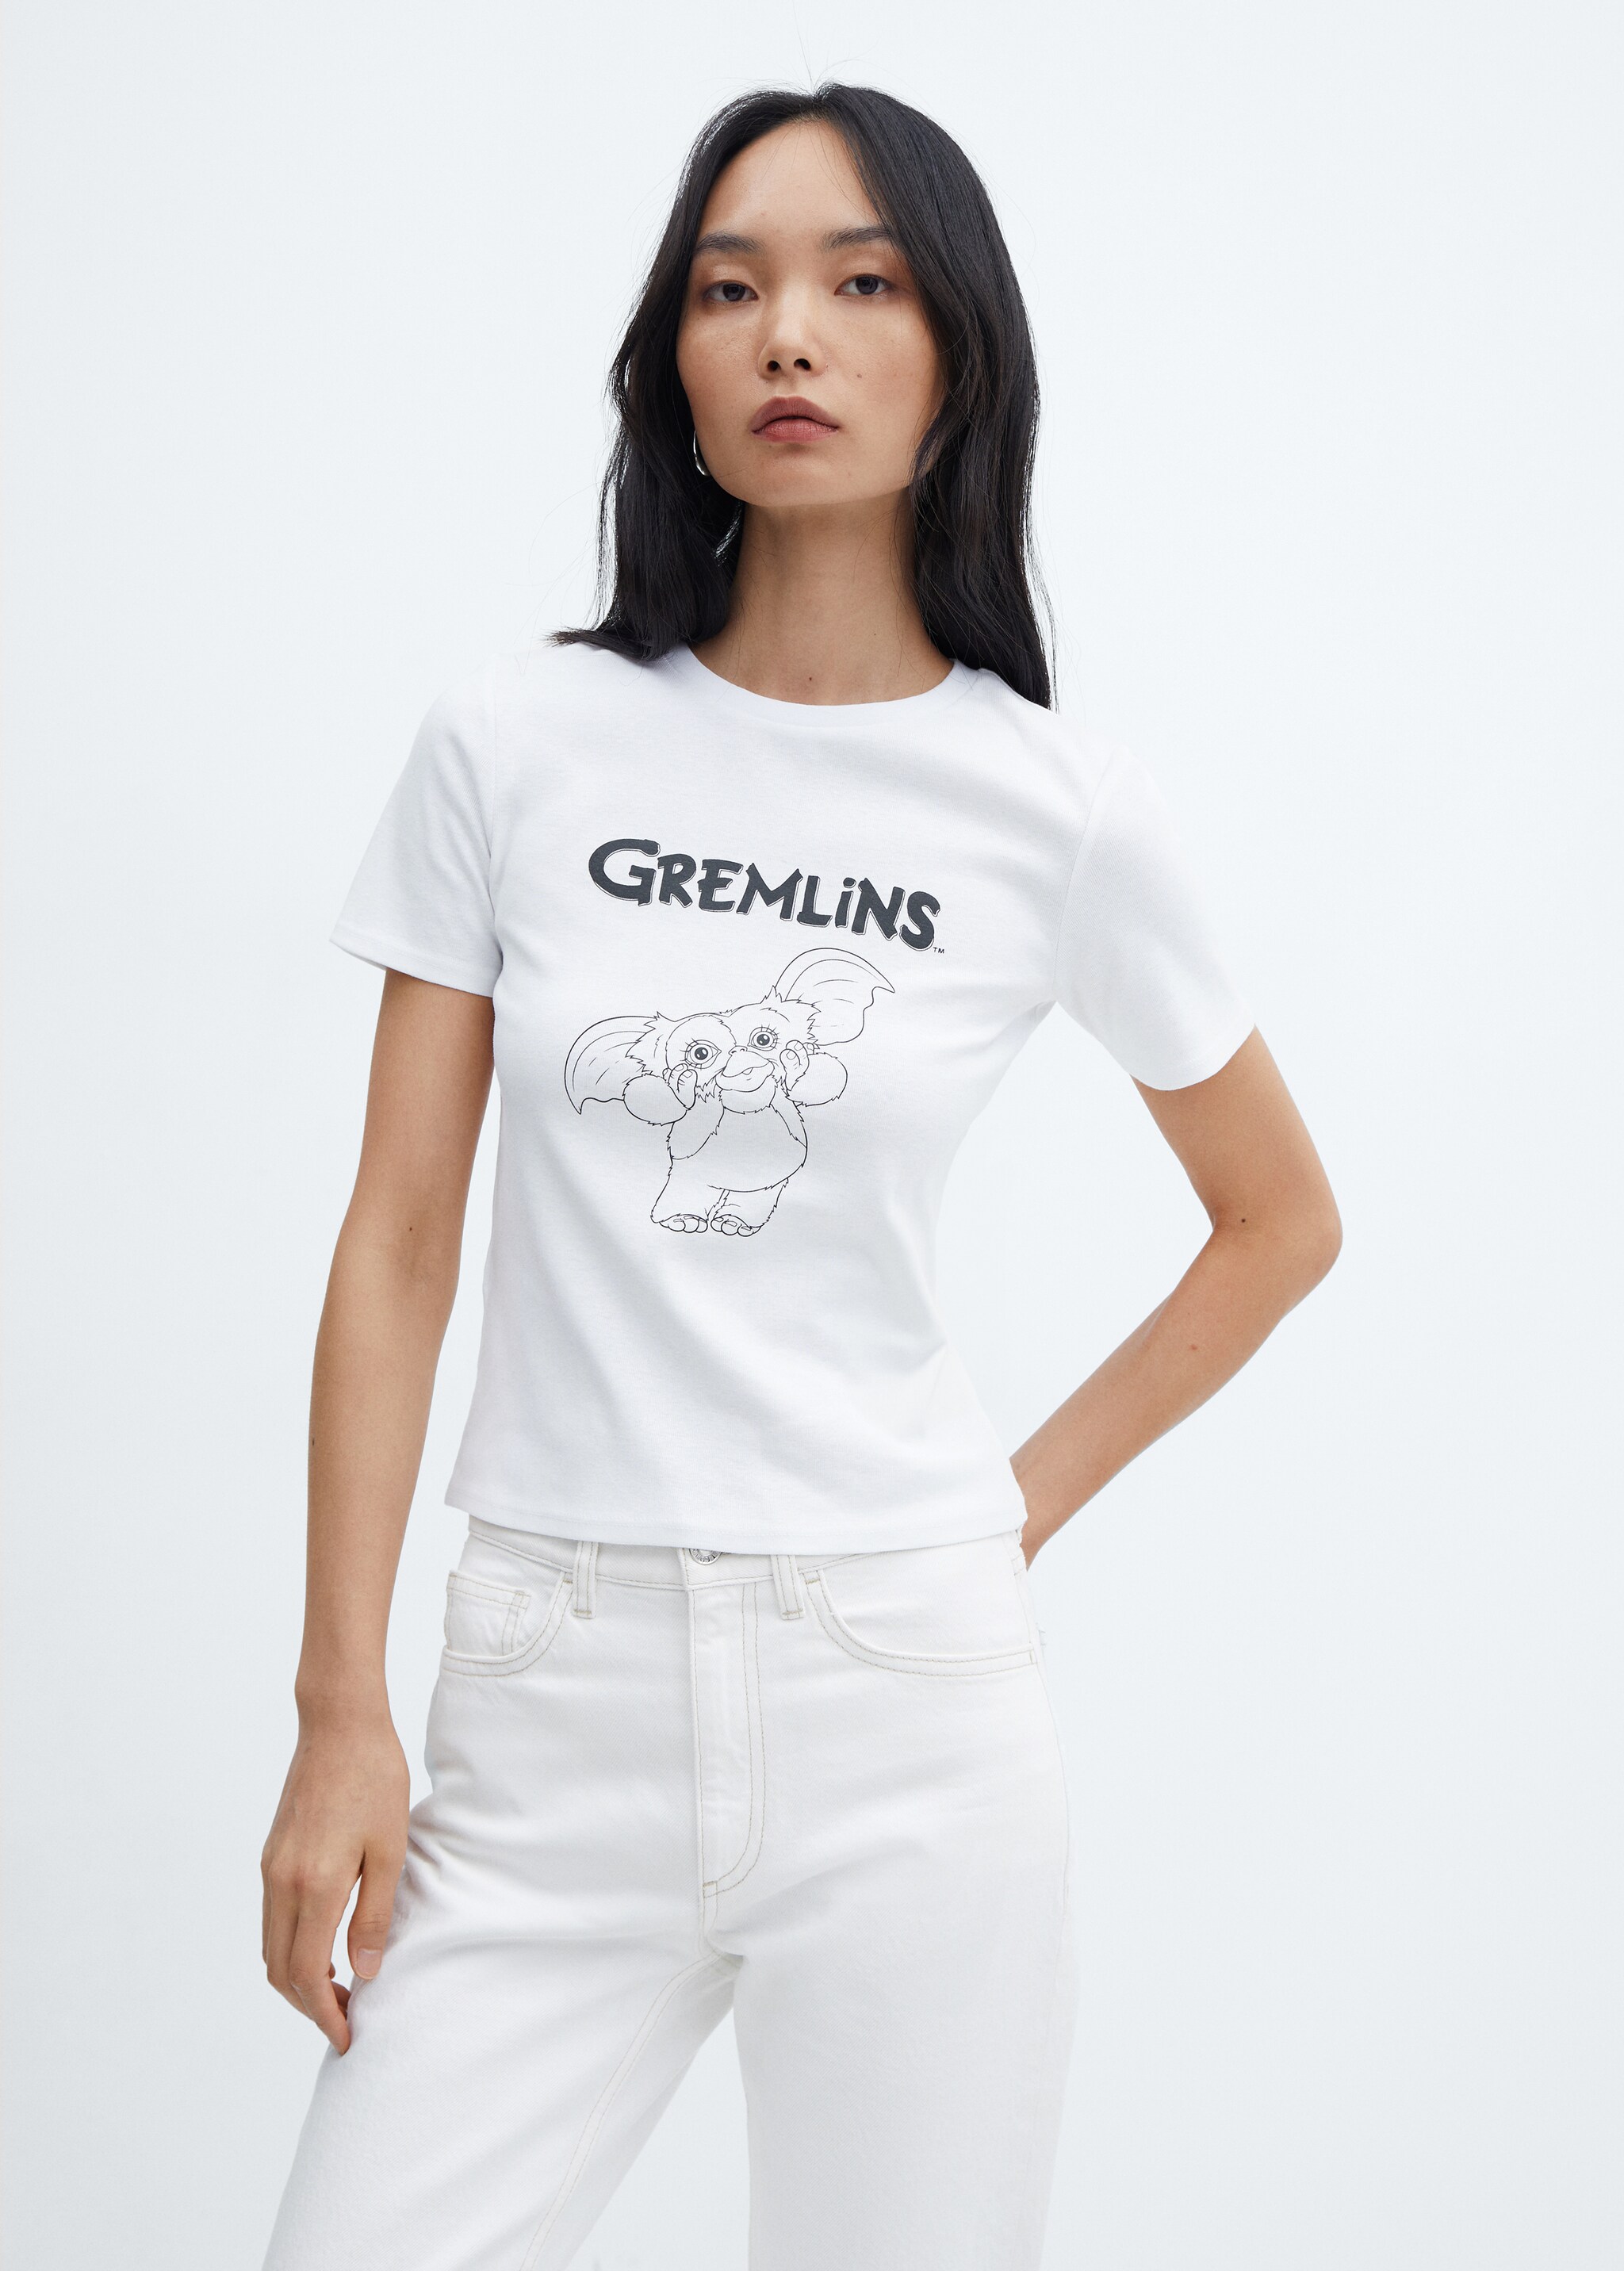 Gremlins T-shirt - Medium plane